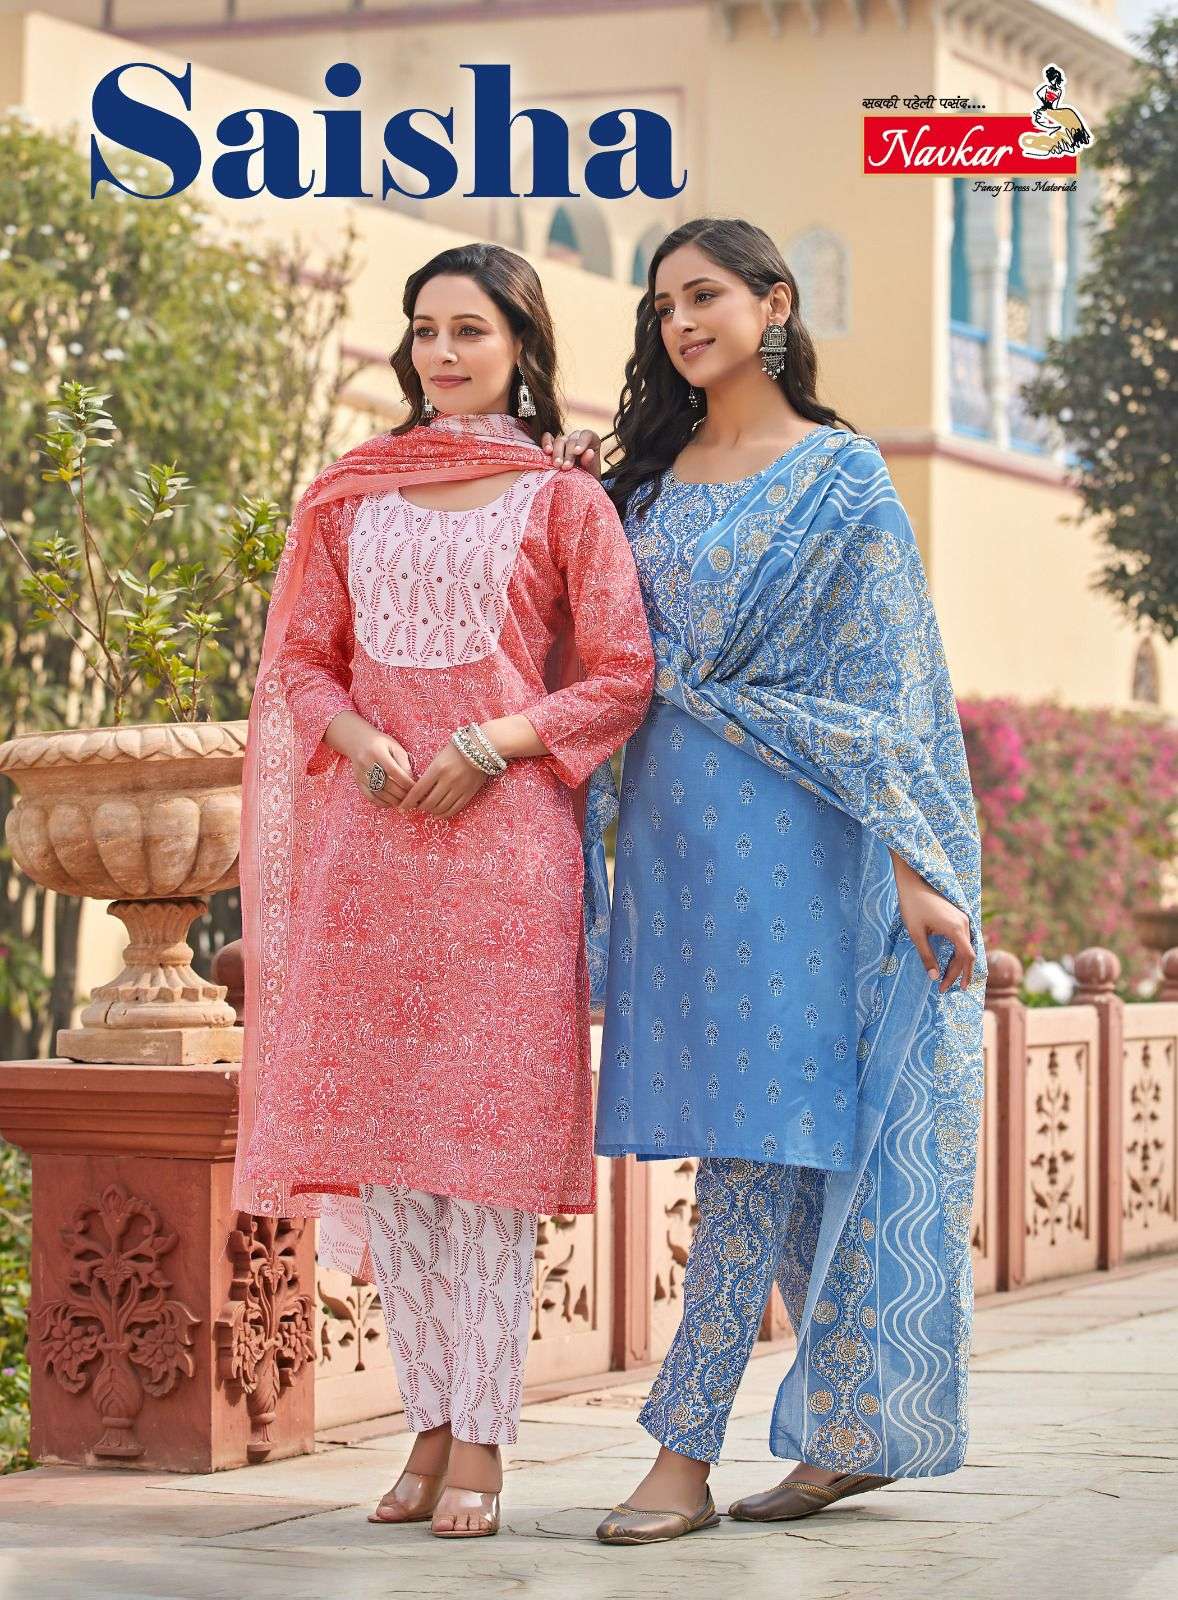 navkar saisha series 101-110 cotton readymade suit 